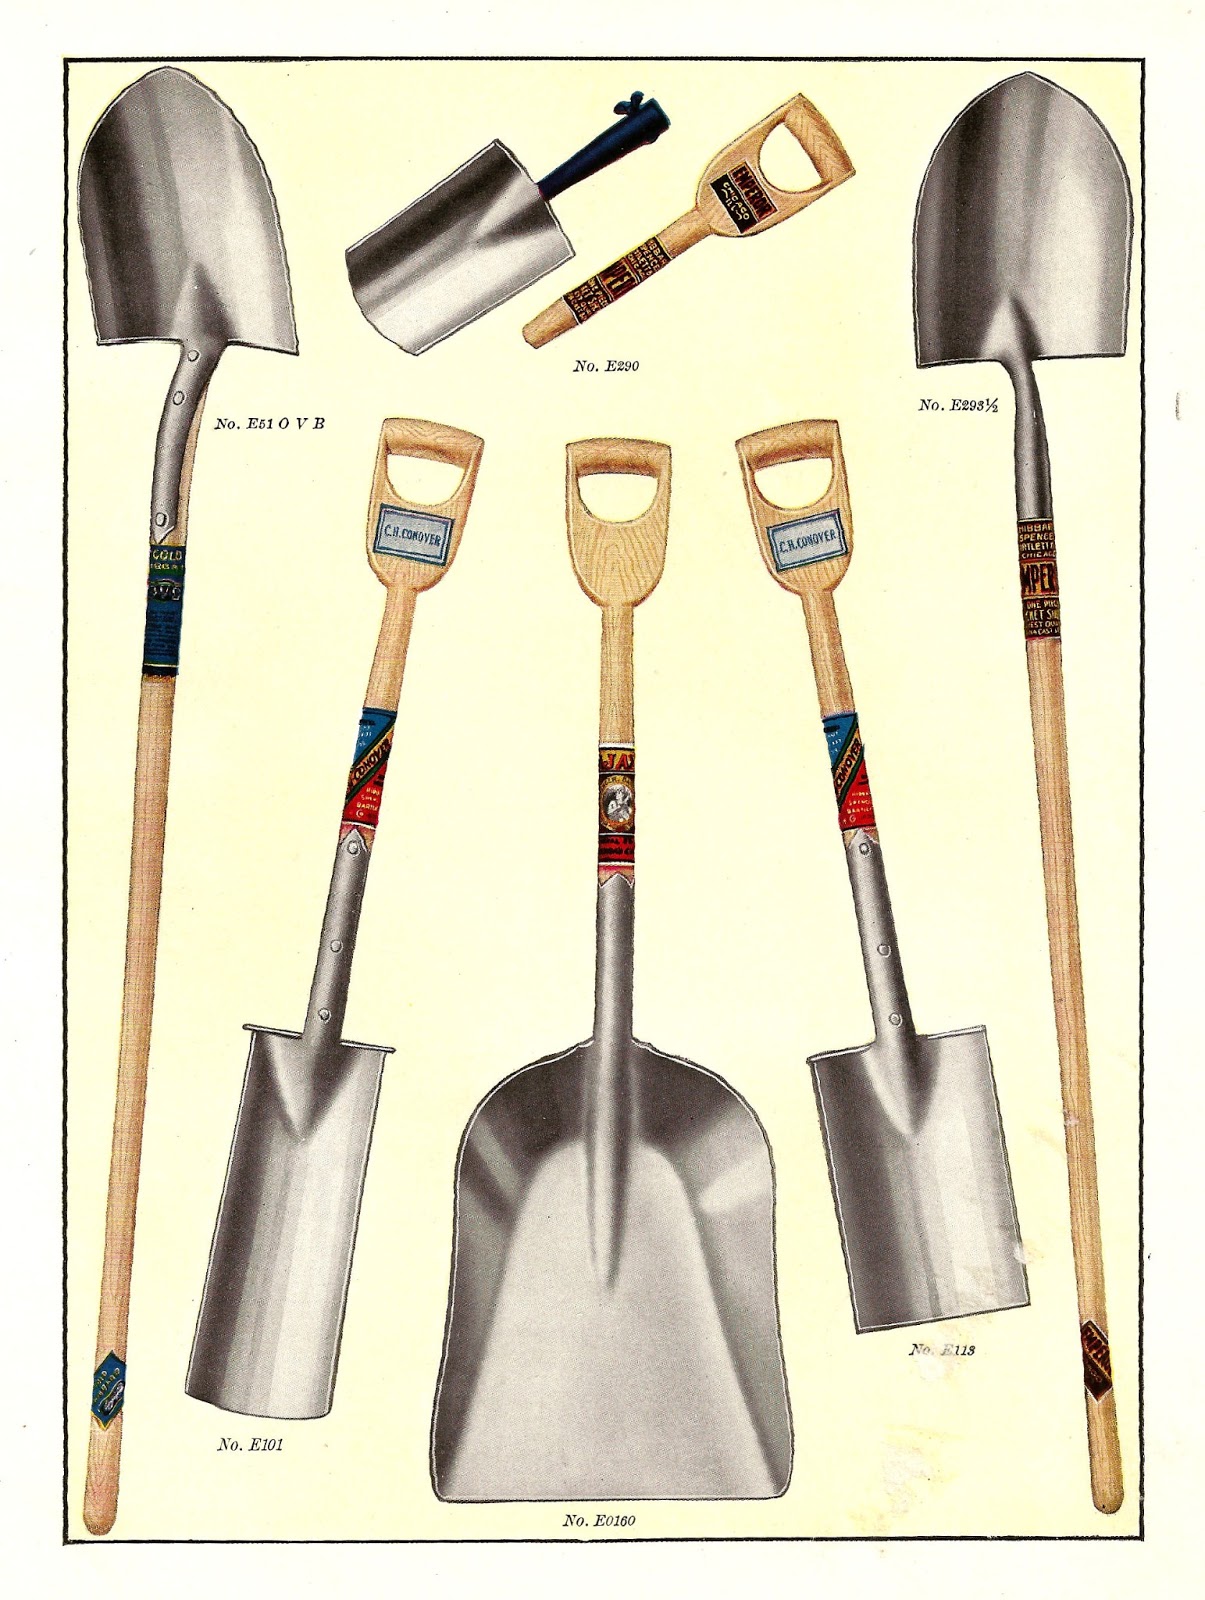 types of shovels